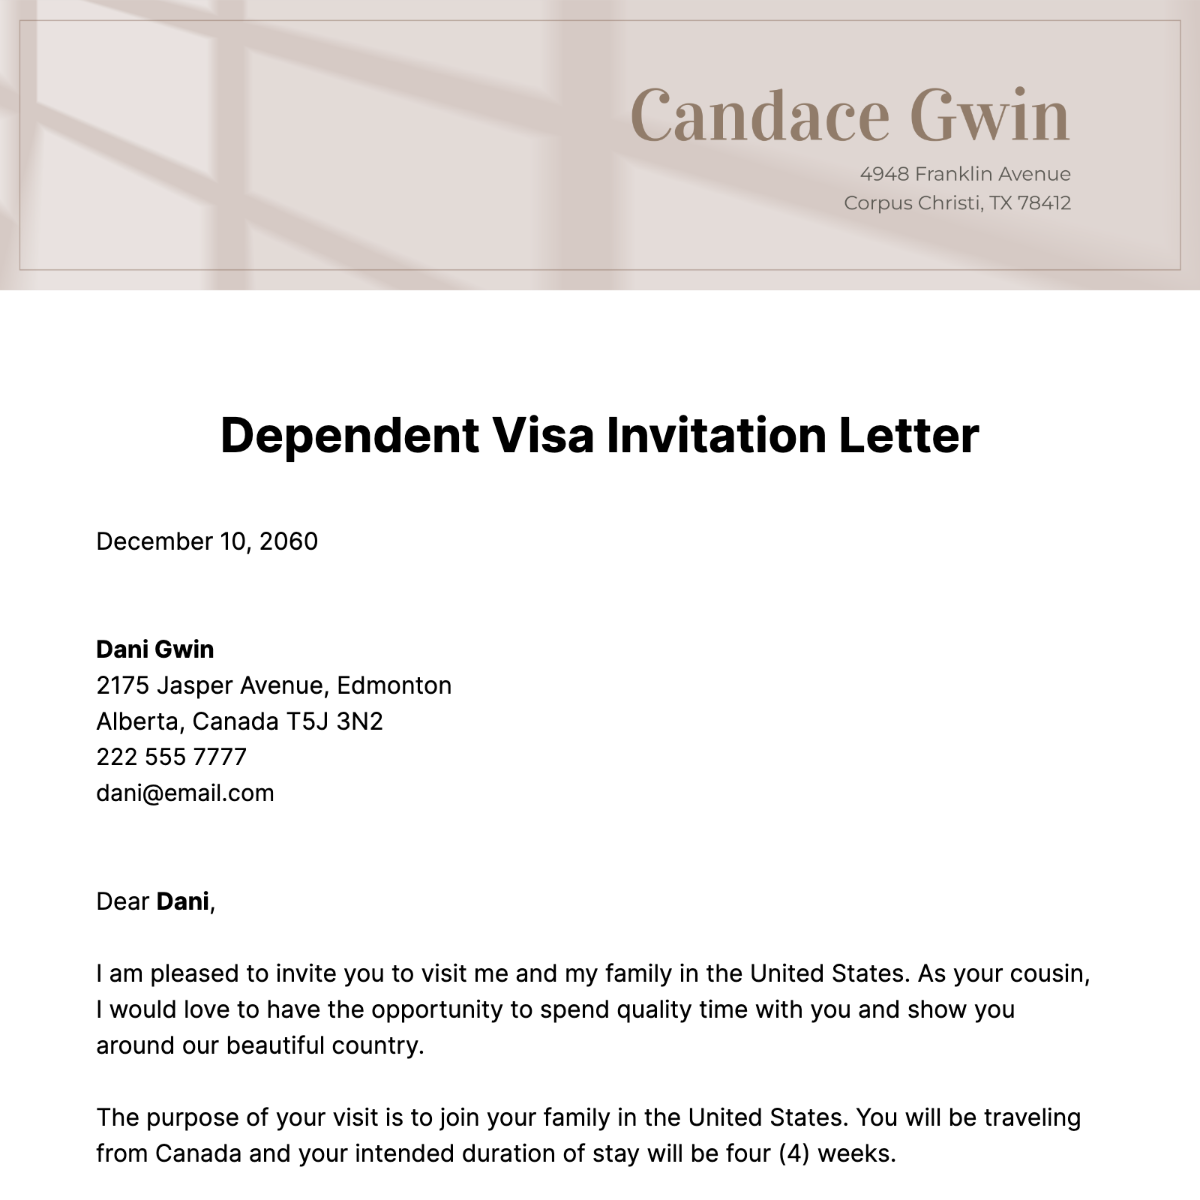 Dependent Visa Invitation Letter Template